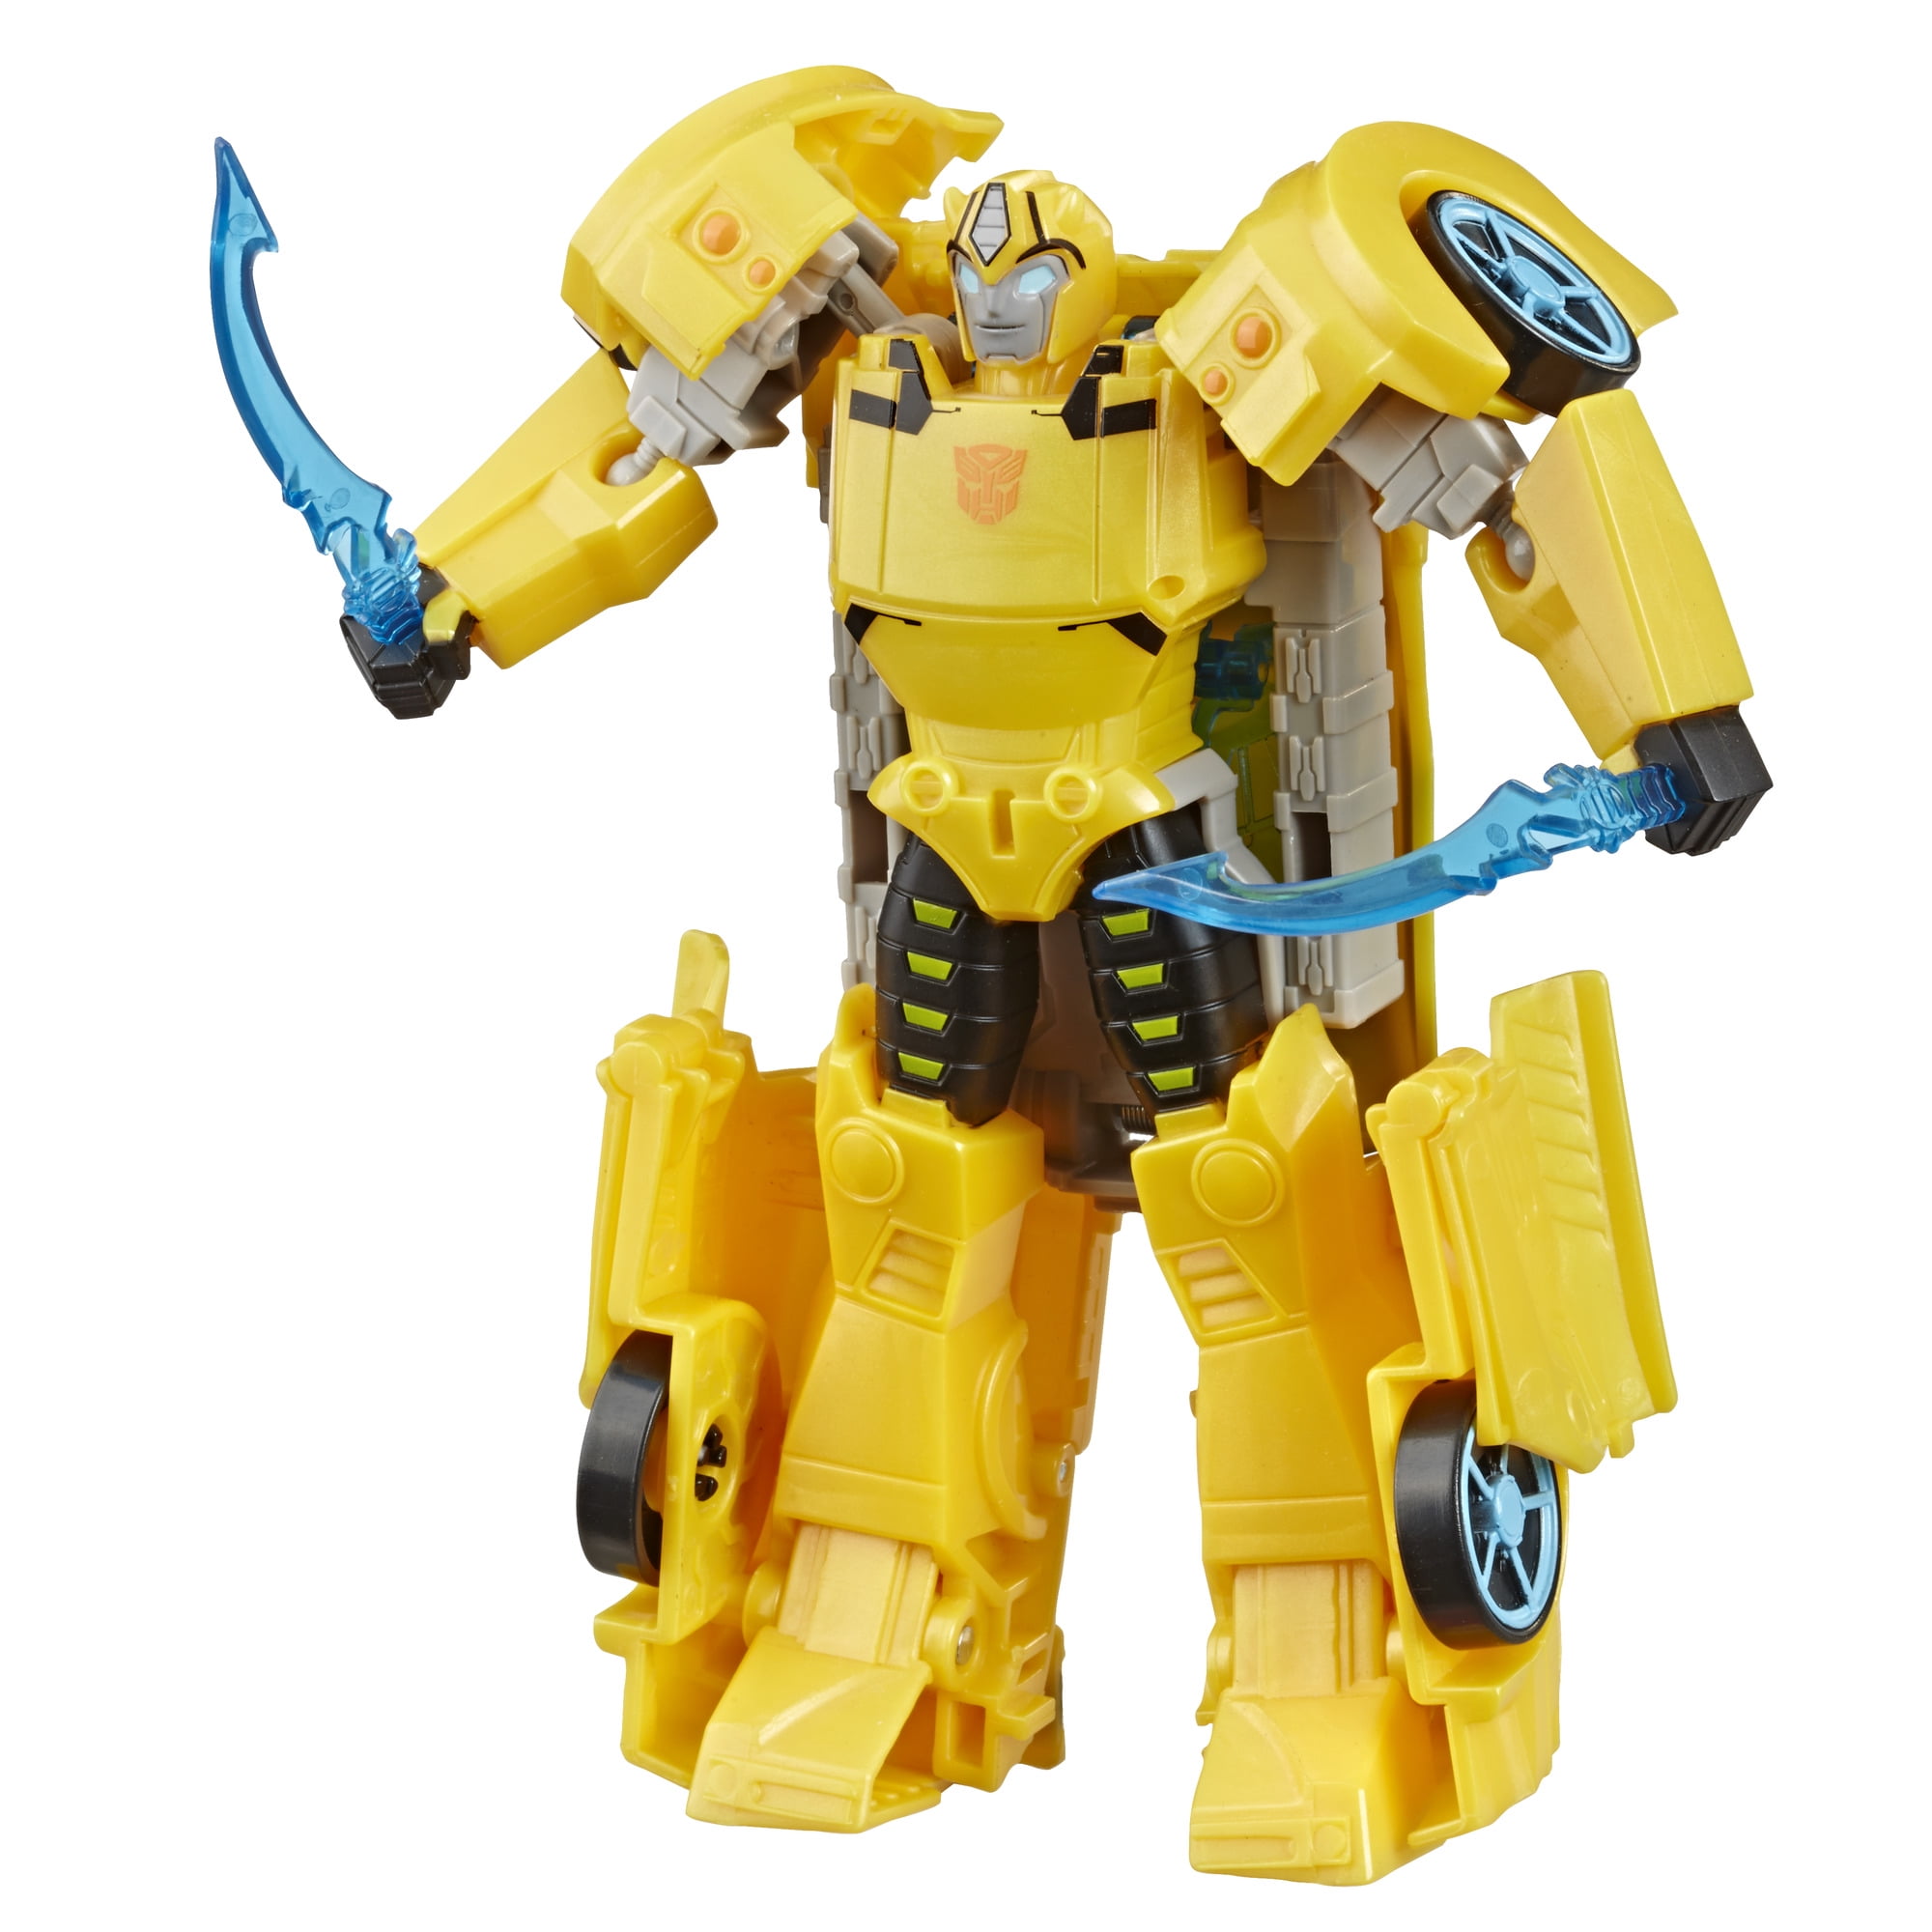 Transformers Toys Class Bumblebee Action Figure Walmart.com